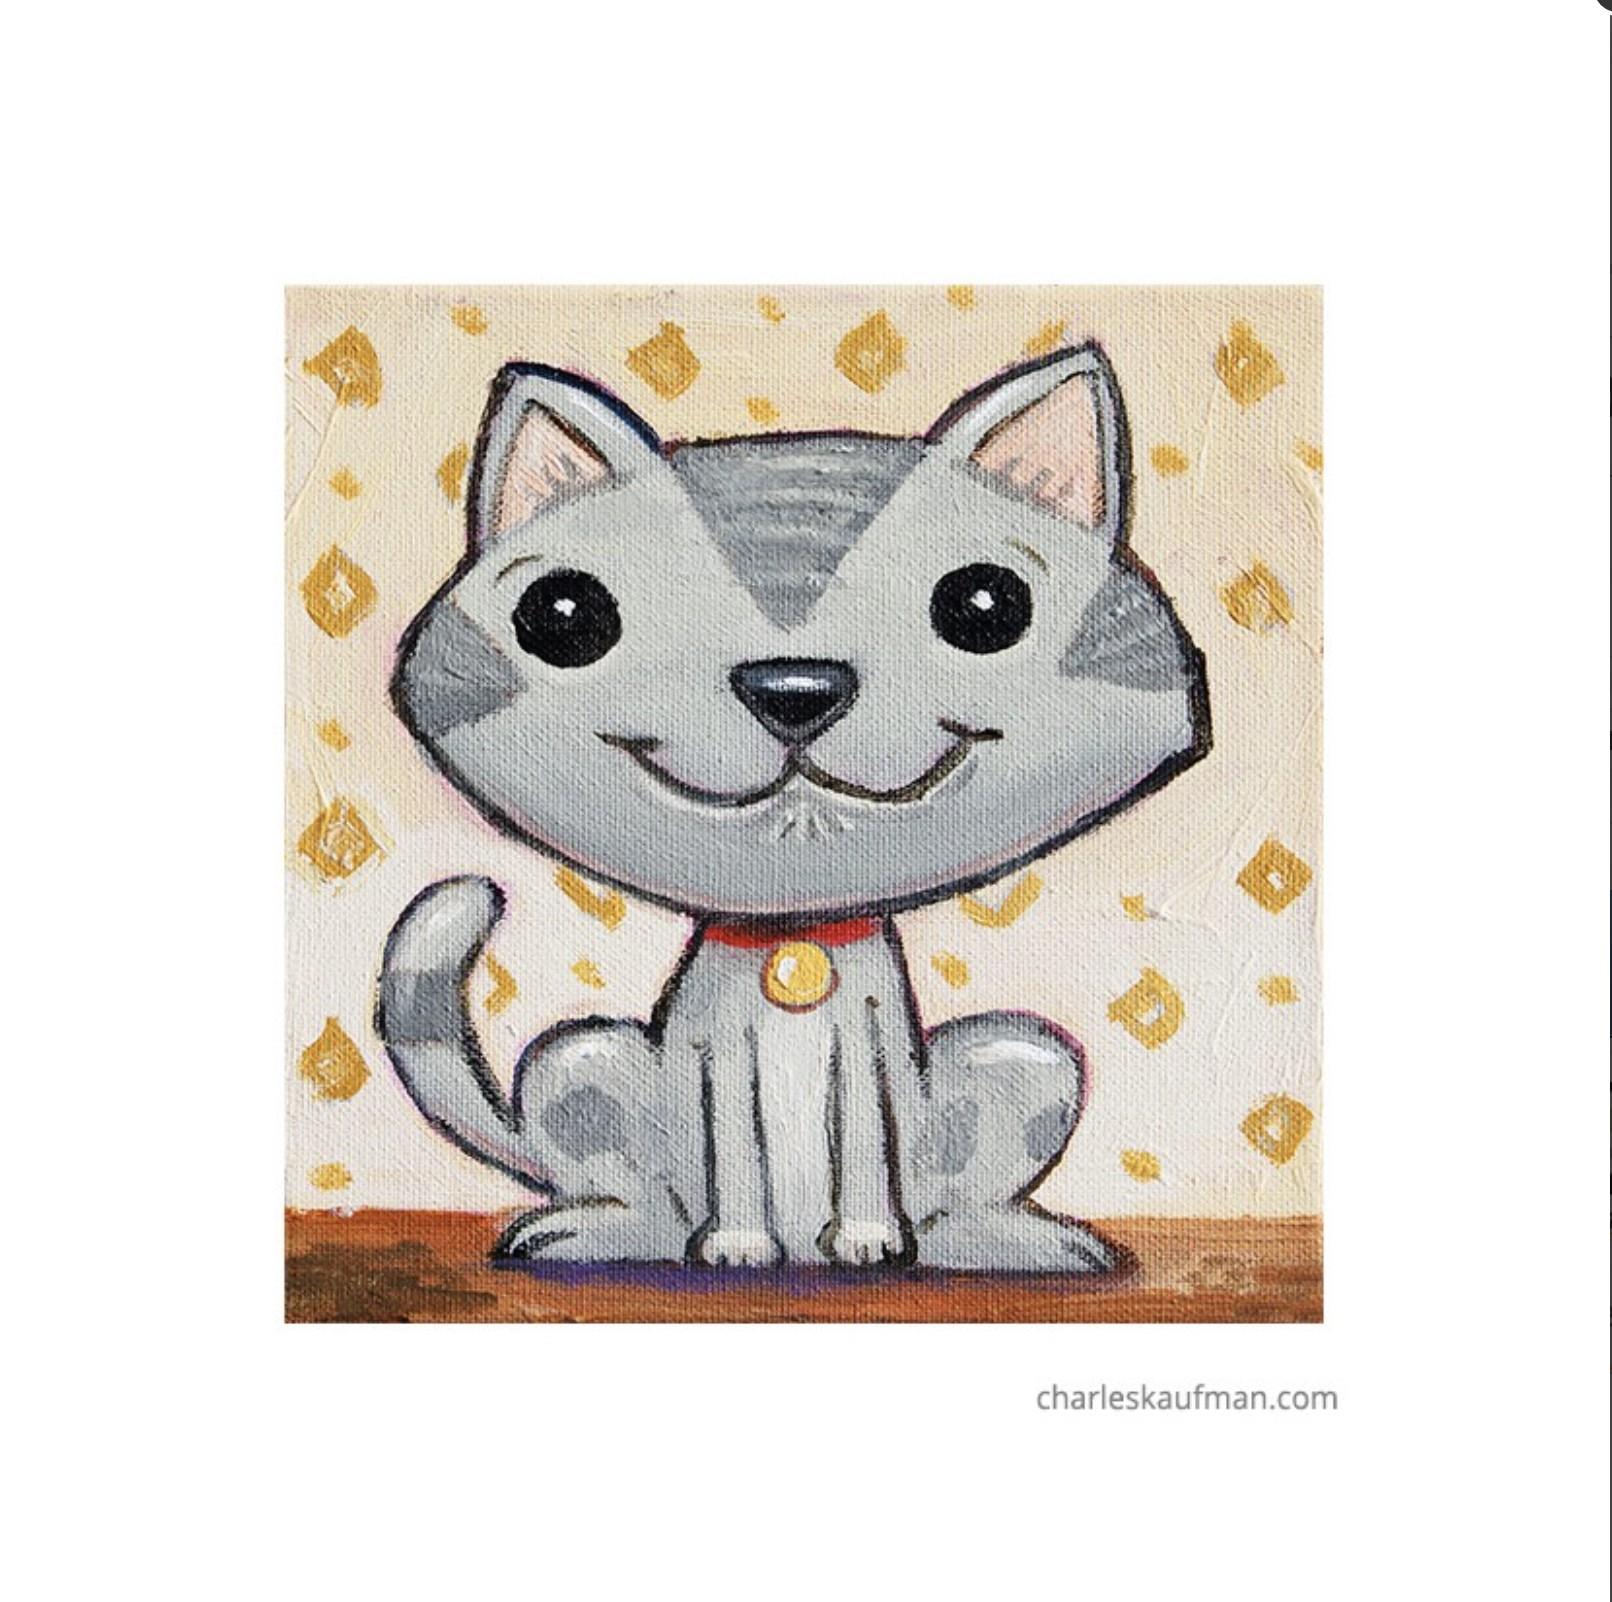 Smiling Grey Cat - Kaufmann, Charles - k-CHK424